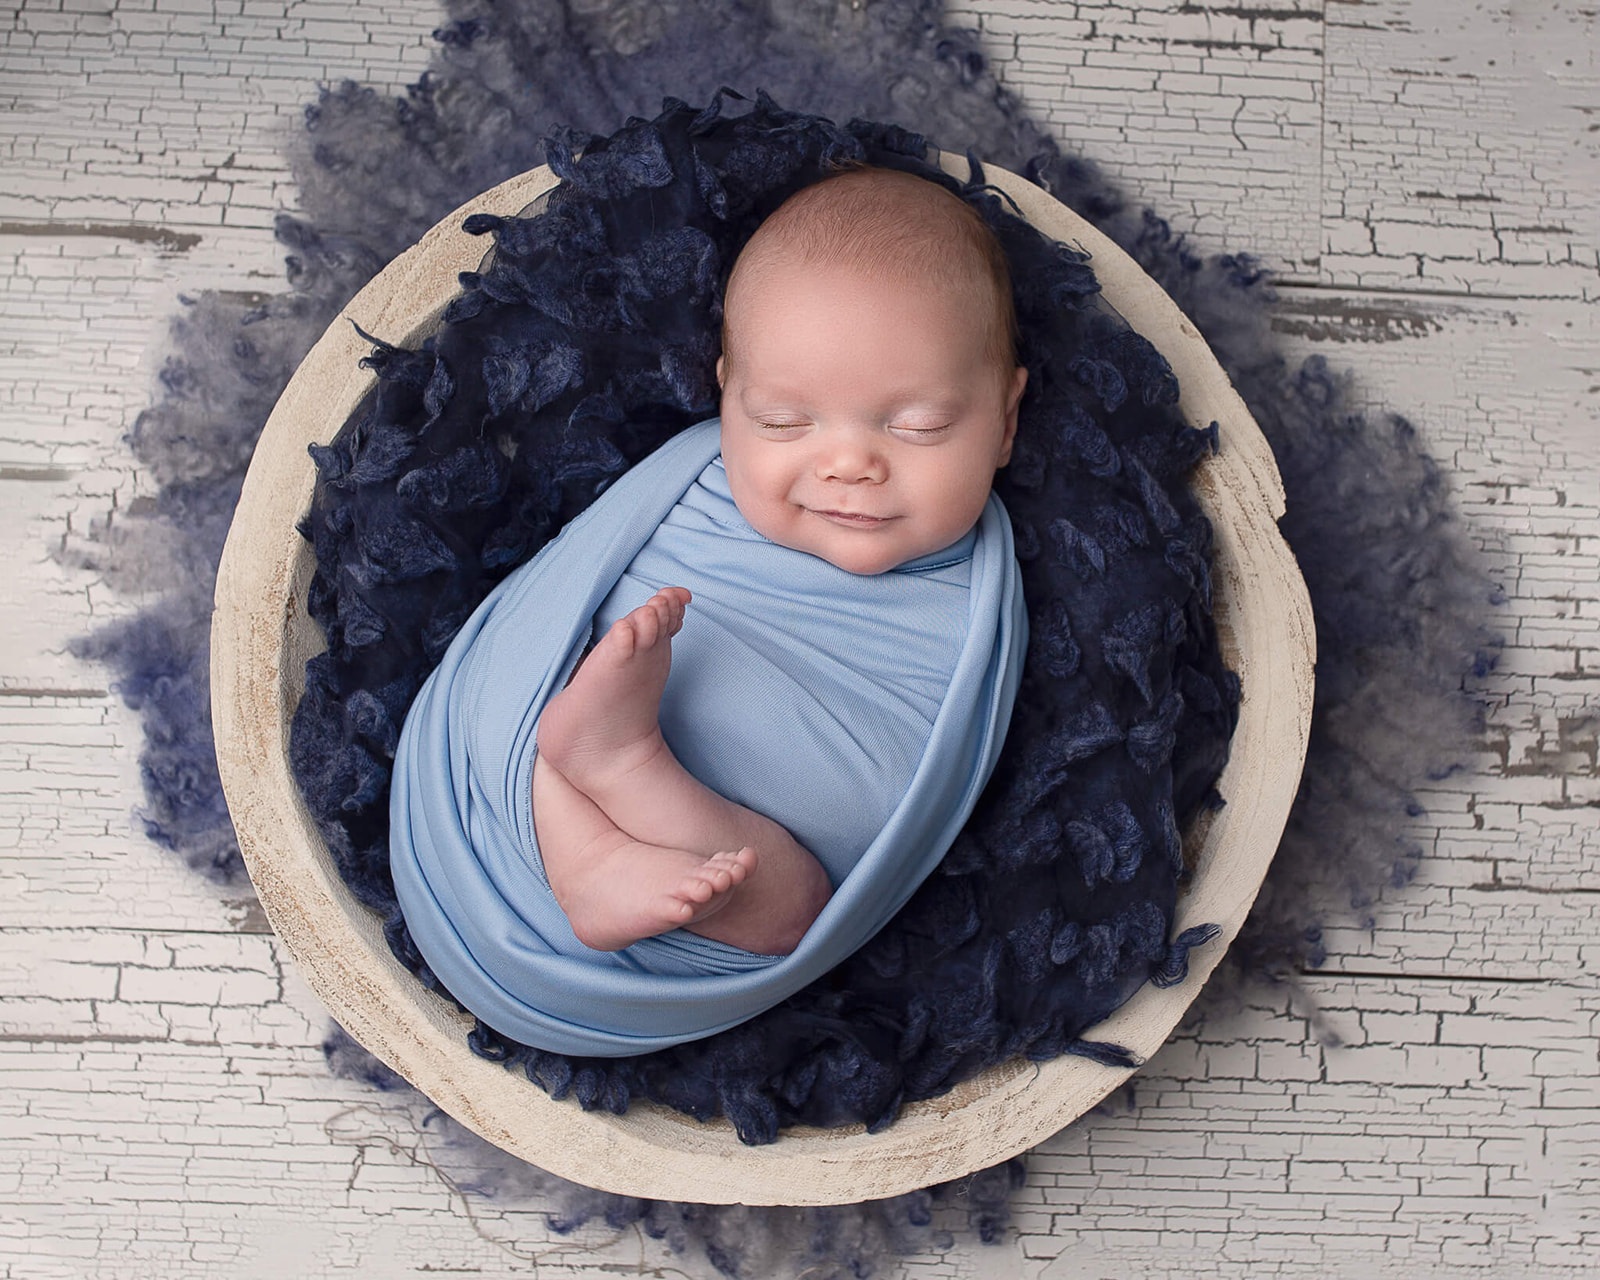 Cleveland OH newborn photographer Kendrah Damis captures happy sleeping baby!